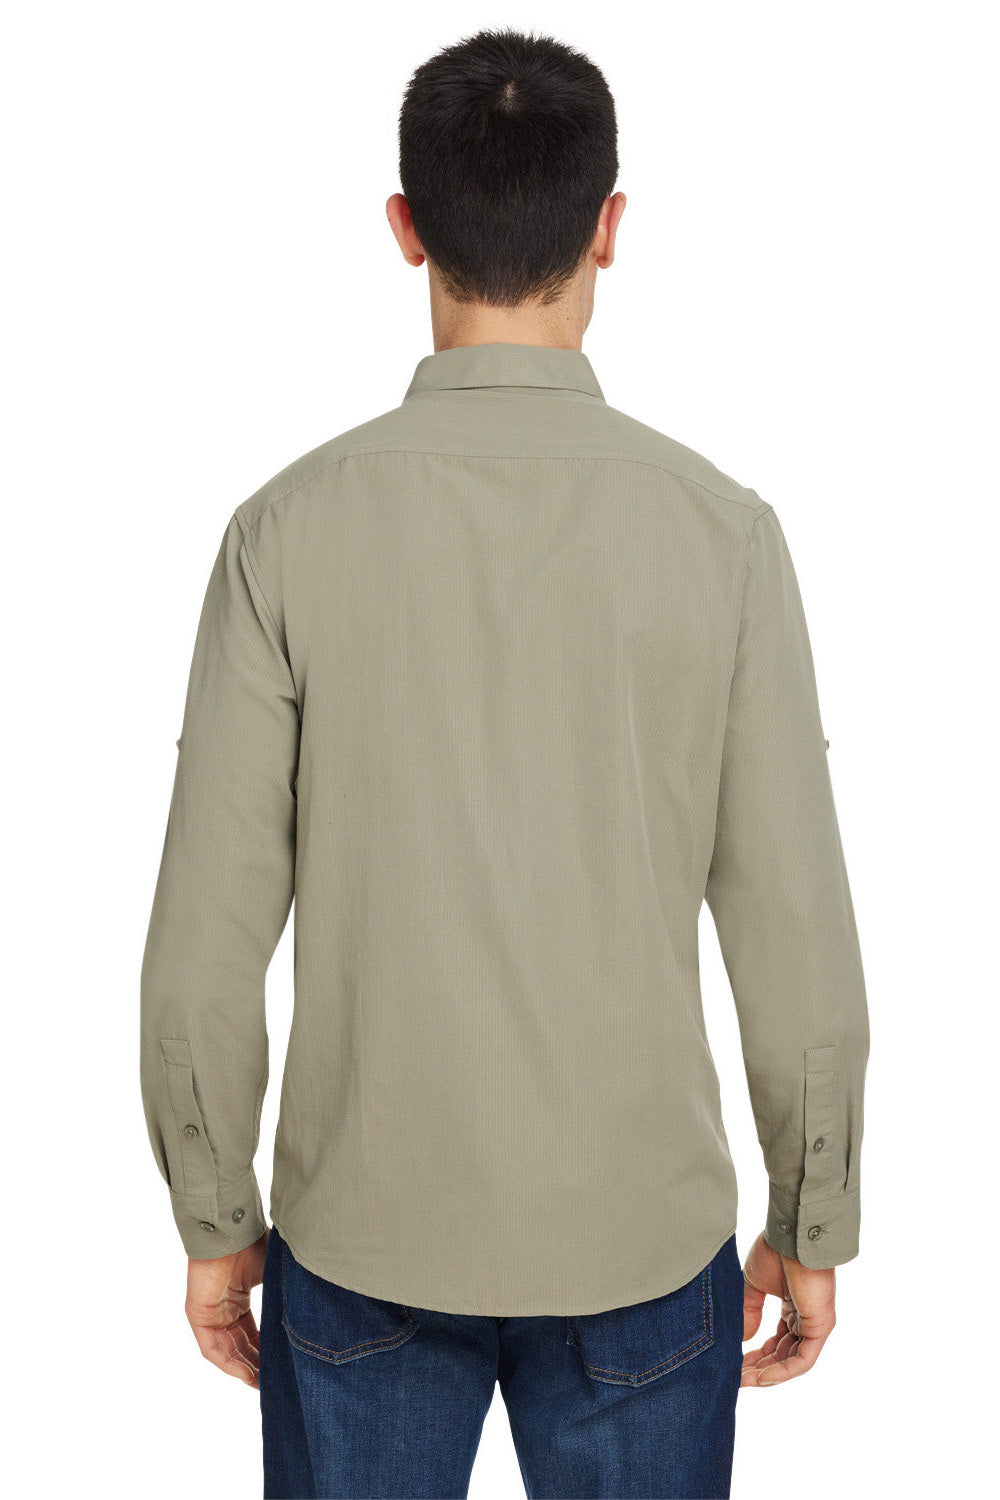 Marmot M14089 Mens Aerobora Long Sleeve Button Down Shirt w/ Pocket Vetiver Back